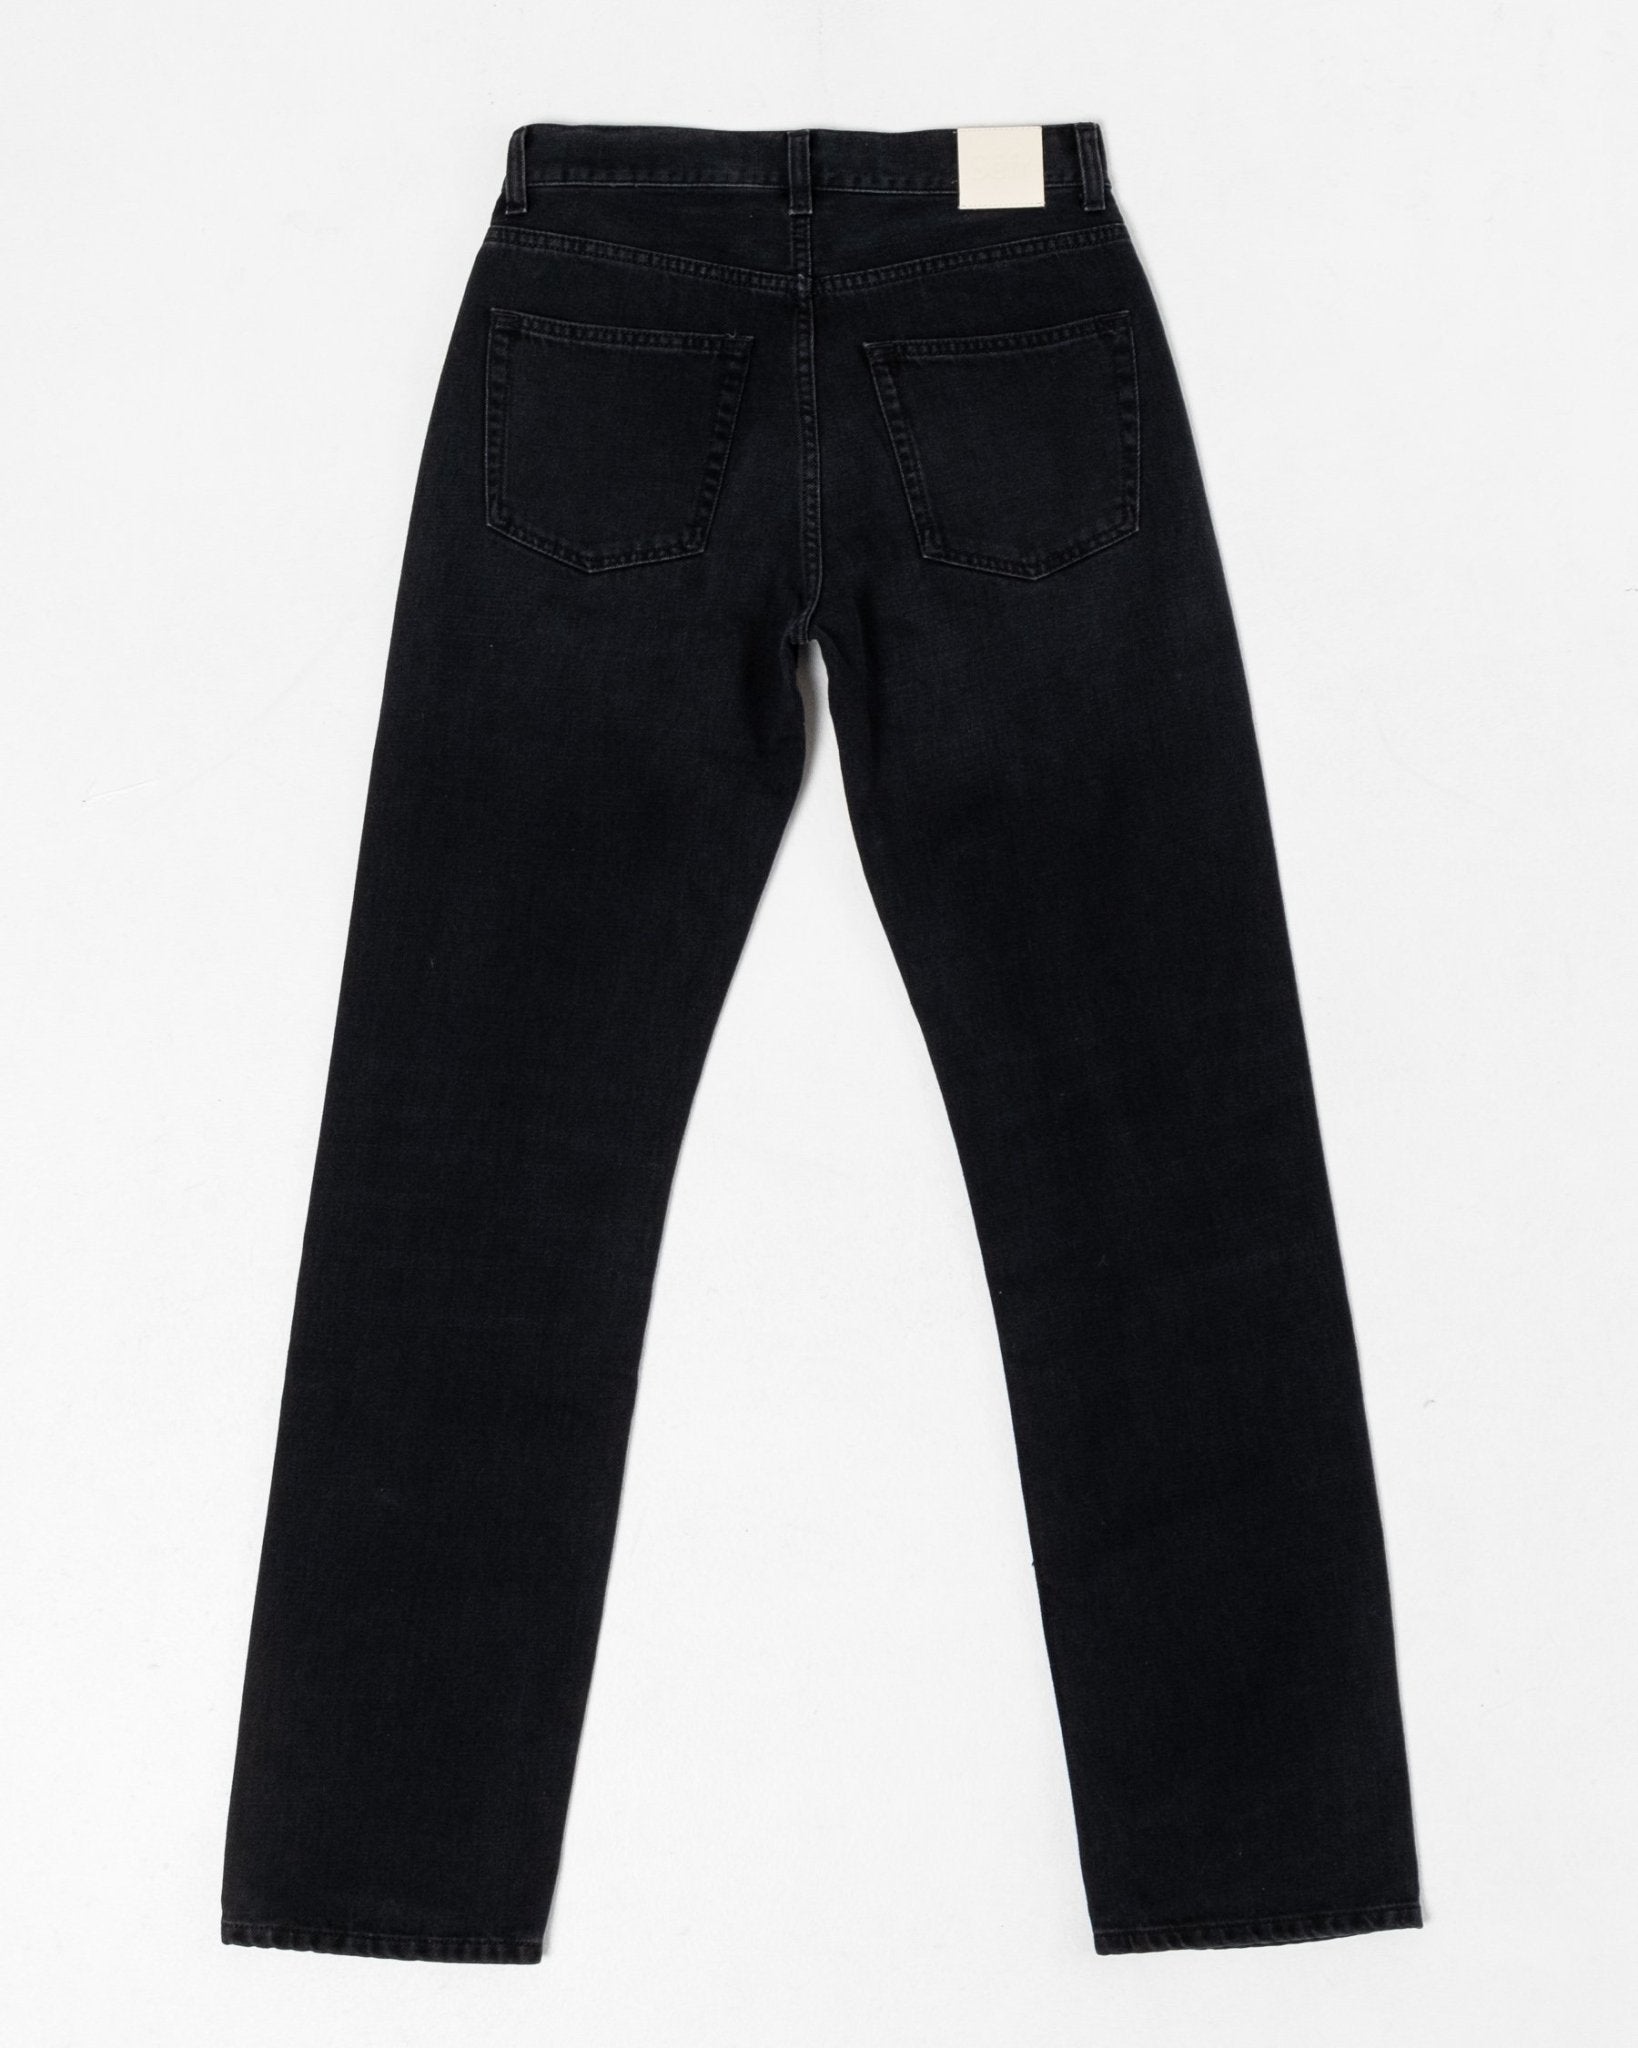 Straight Cut Jeans Rinsed Blue/Black - Meadow